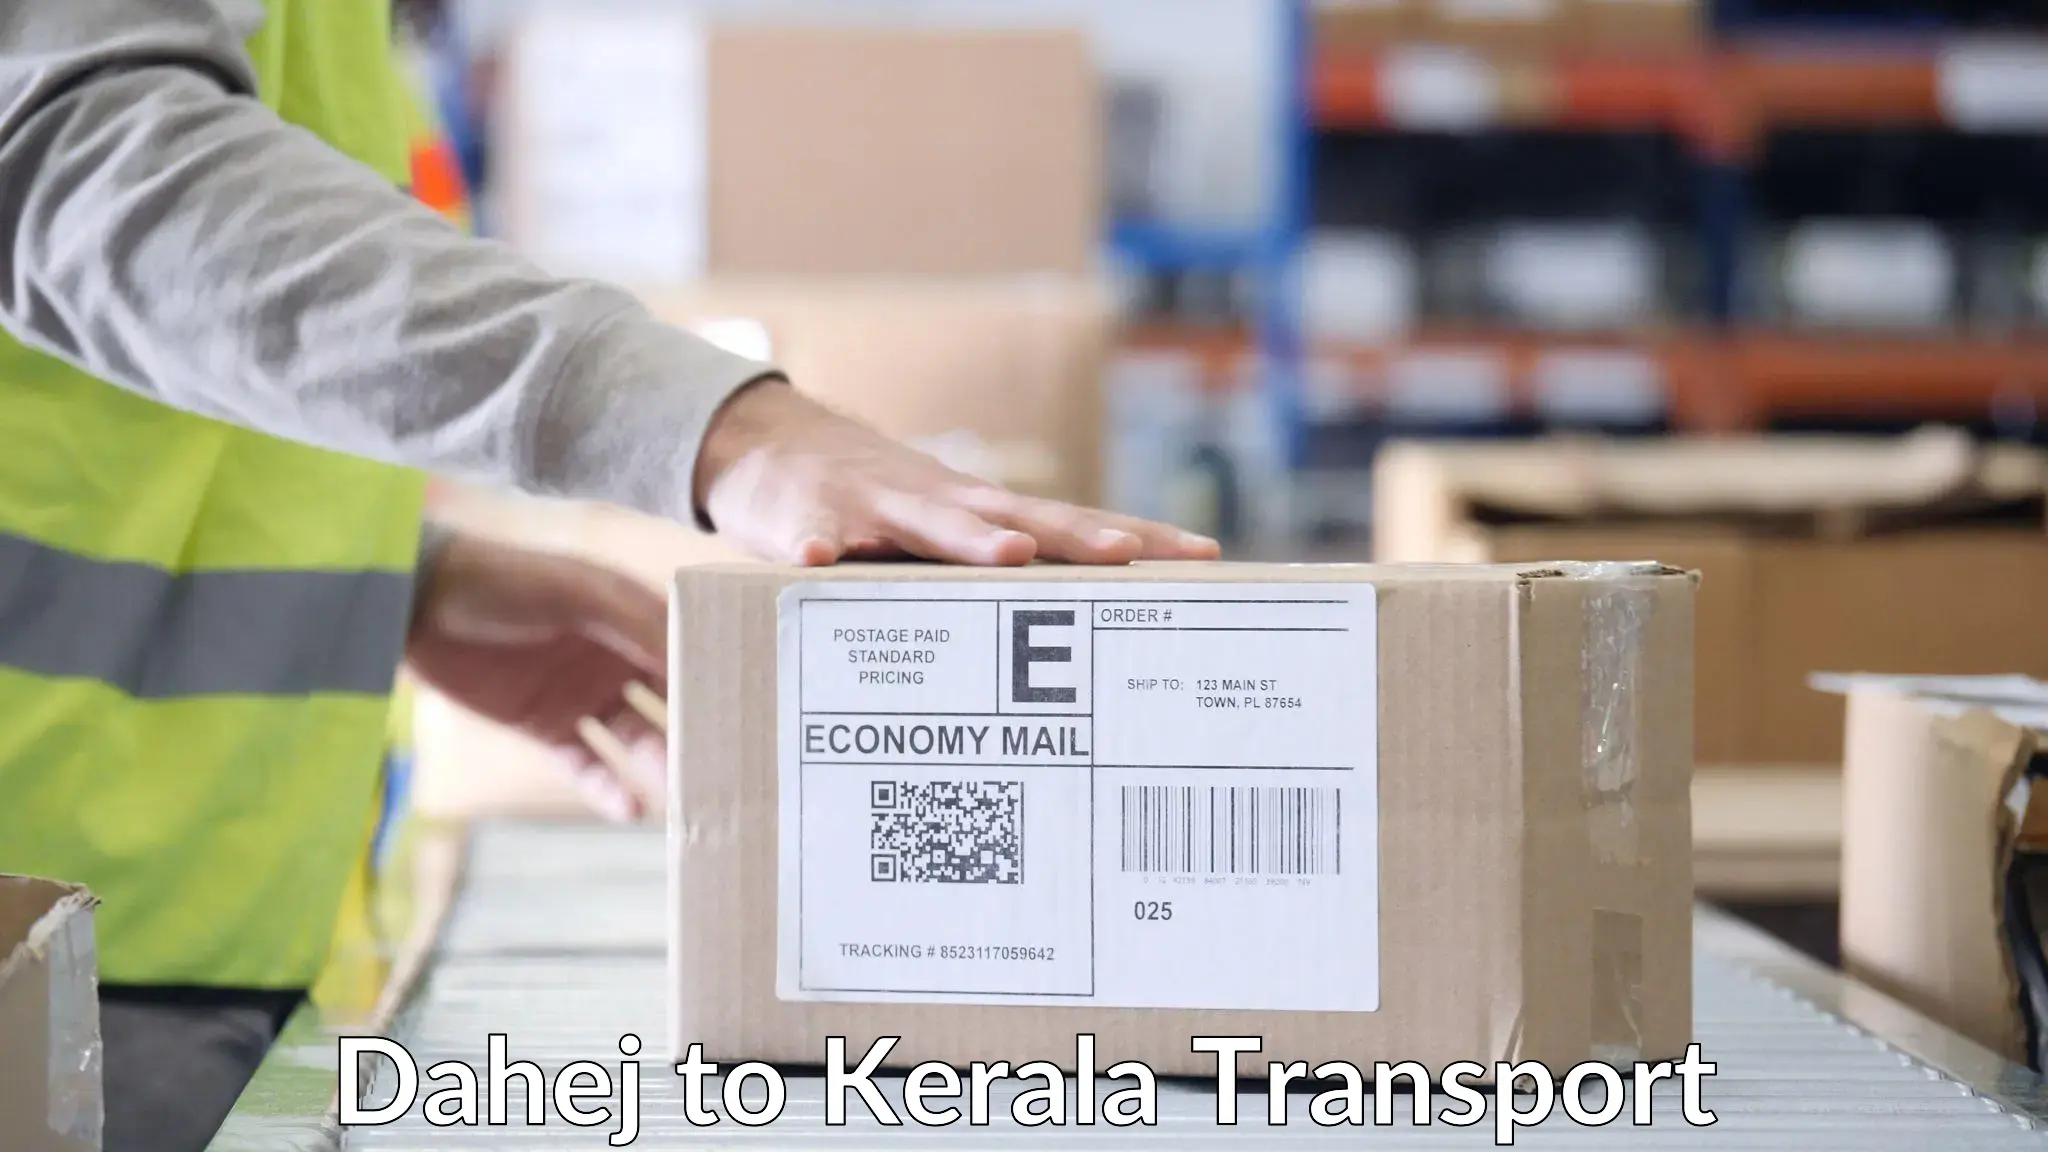 Transport in sharing Dahej to Kerala